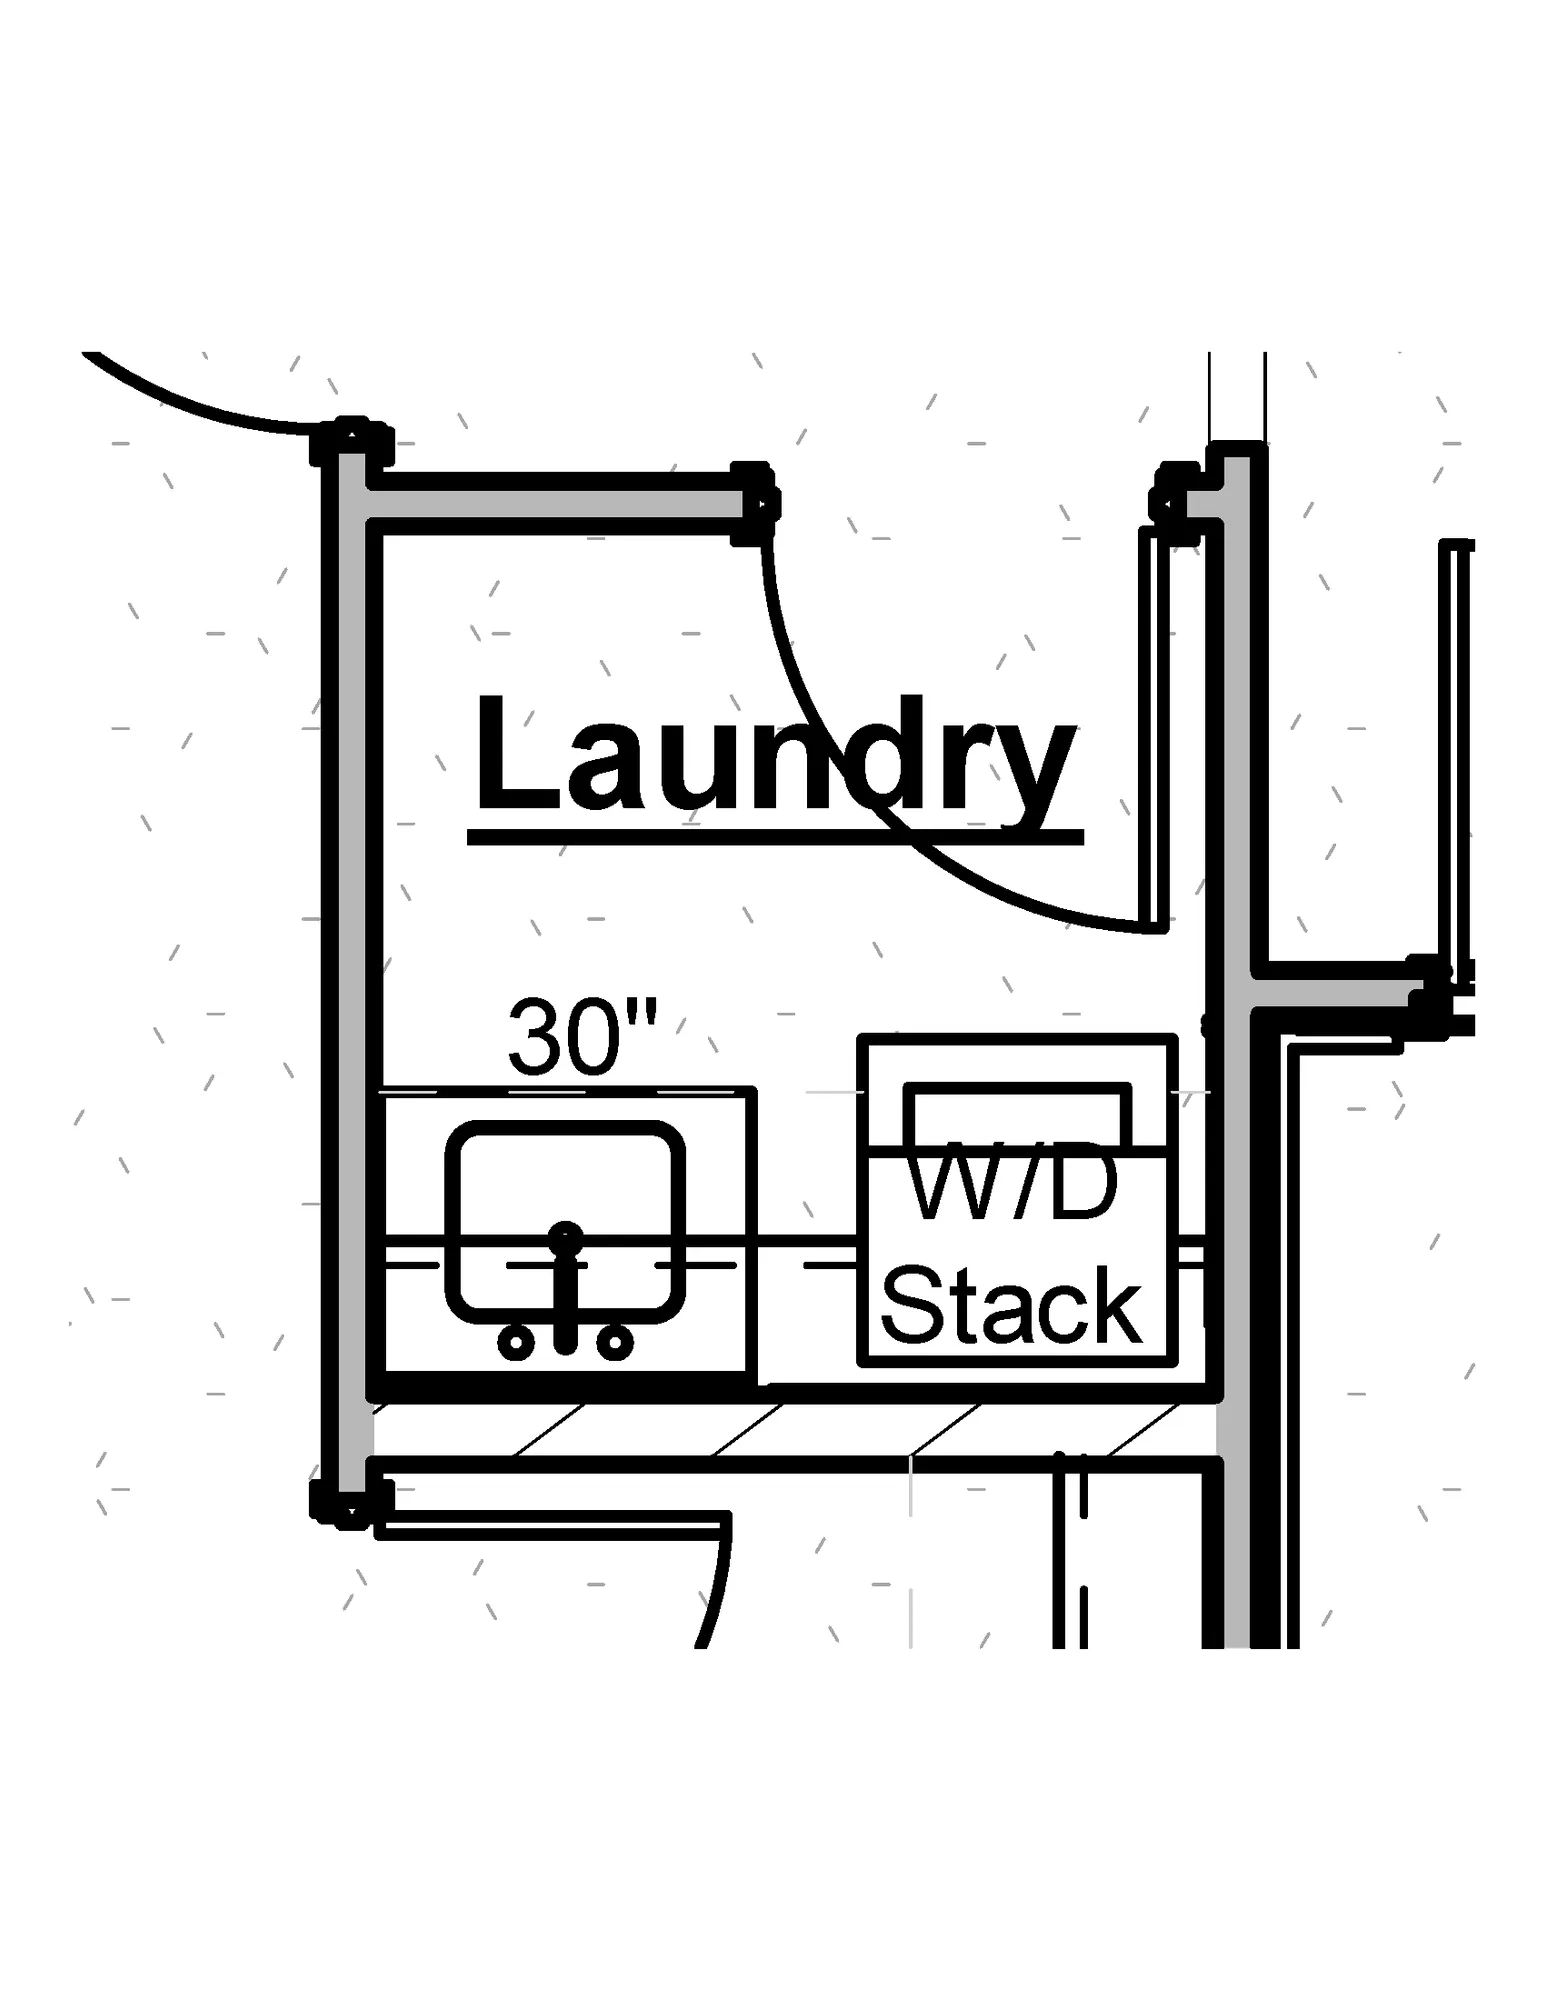 Laundry Sink Option - undefined